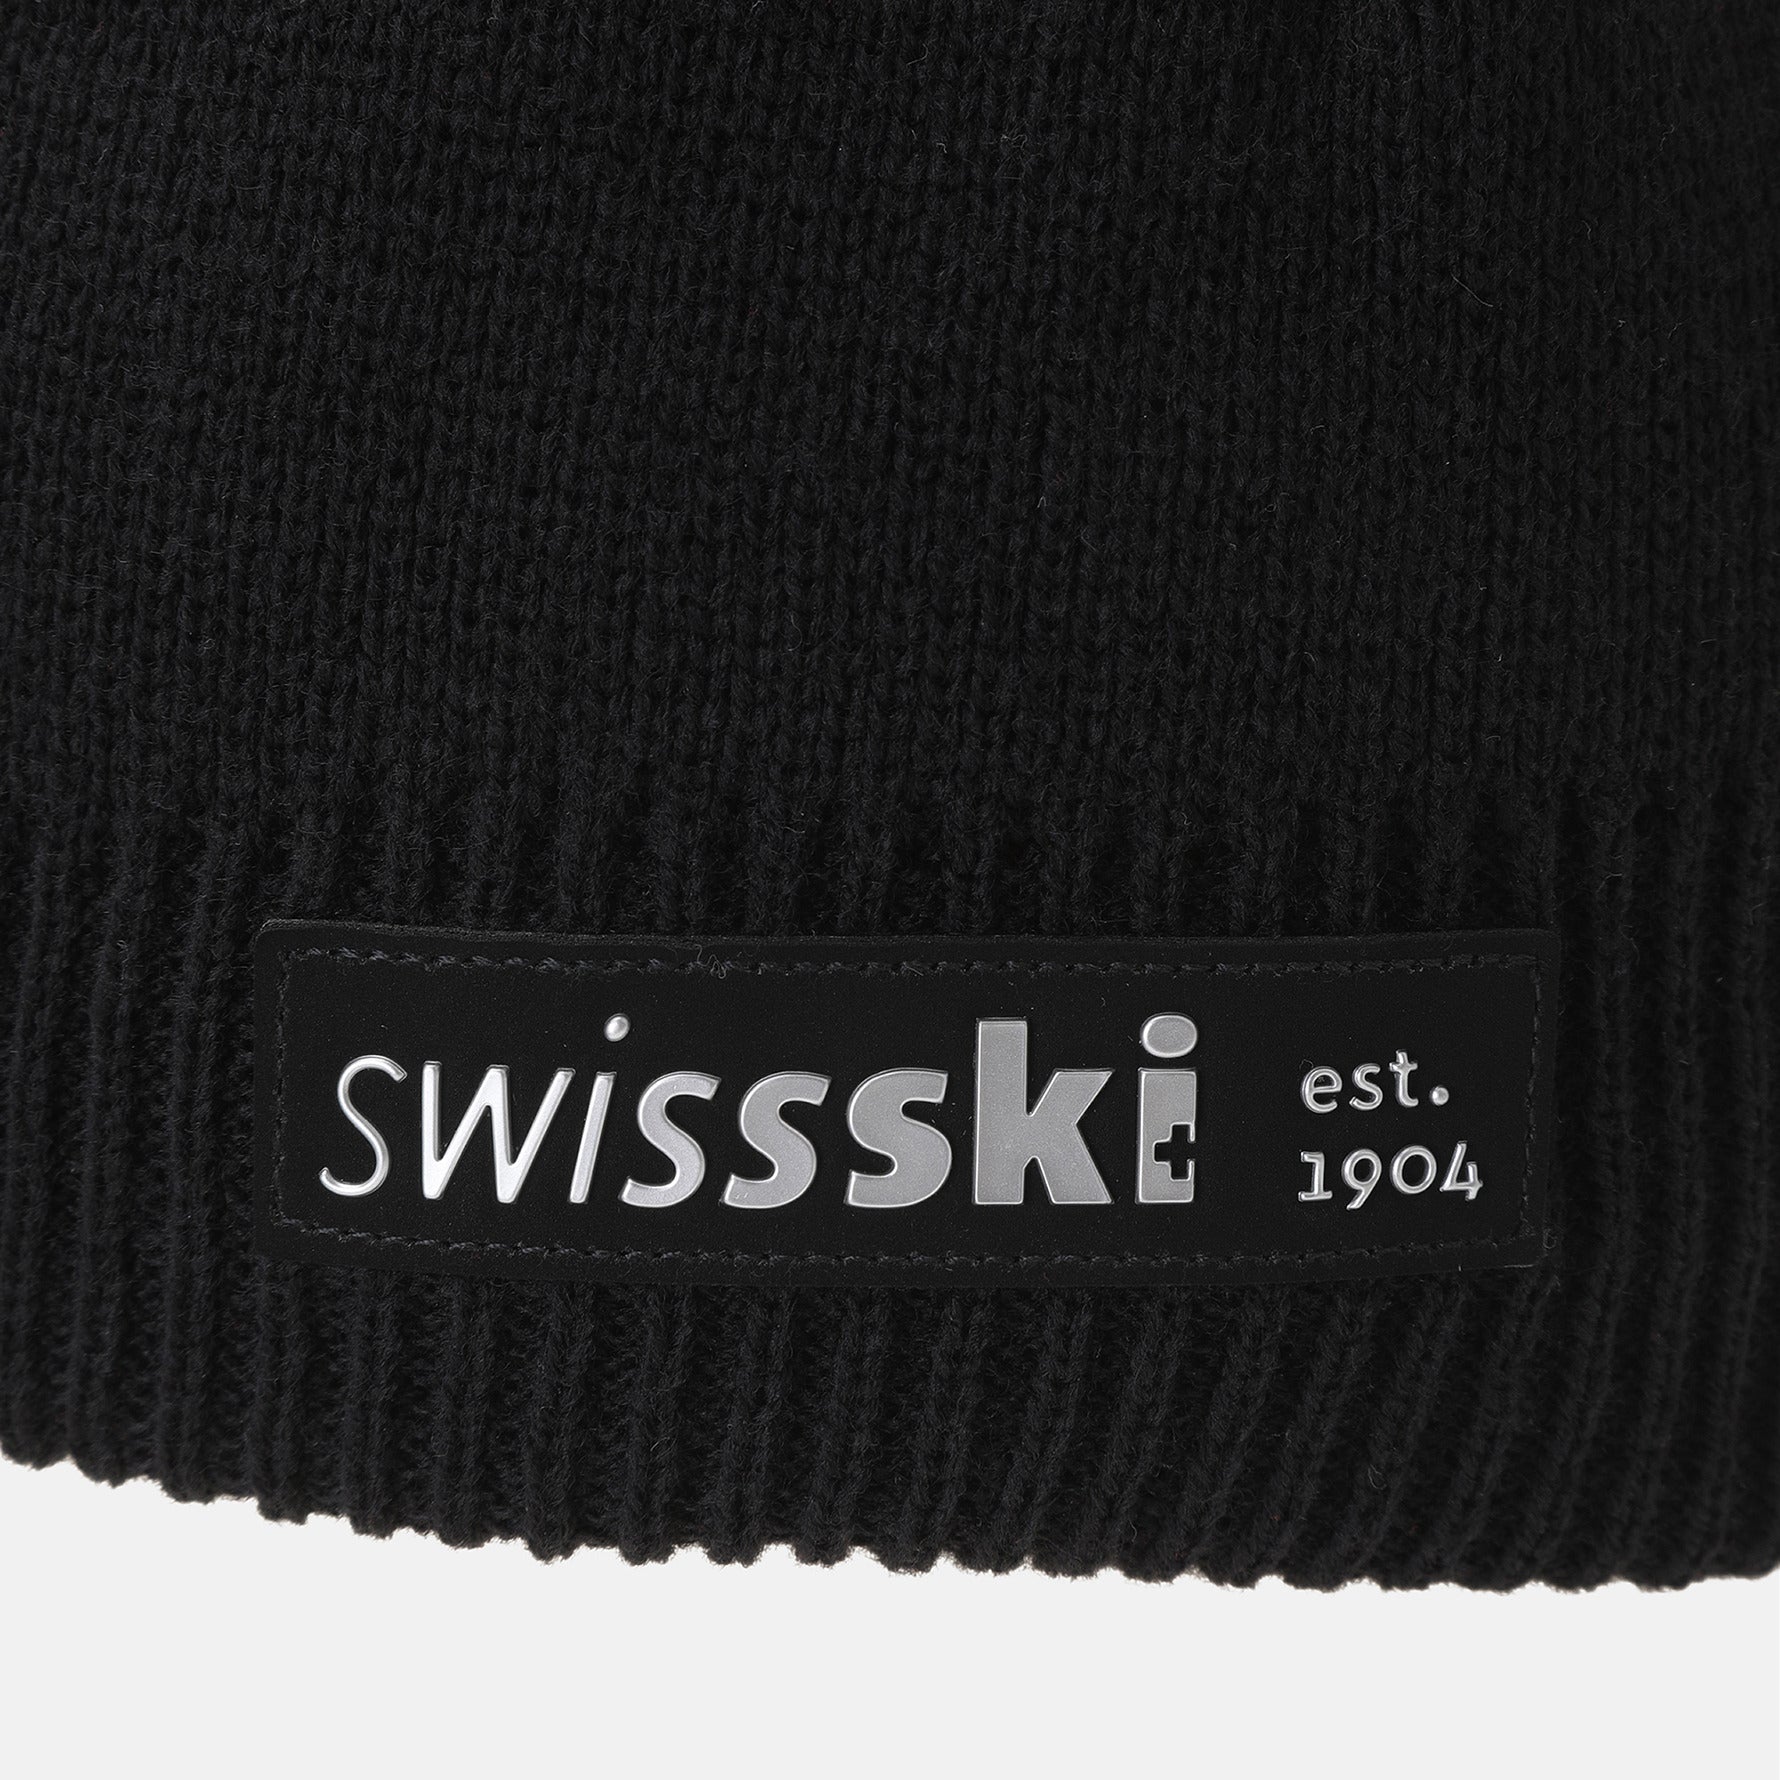 SWISSSKI TEAM UNFOLD BEANIE 中性 瑞士滑雪隊毛帽